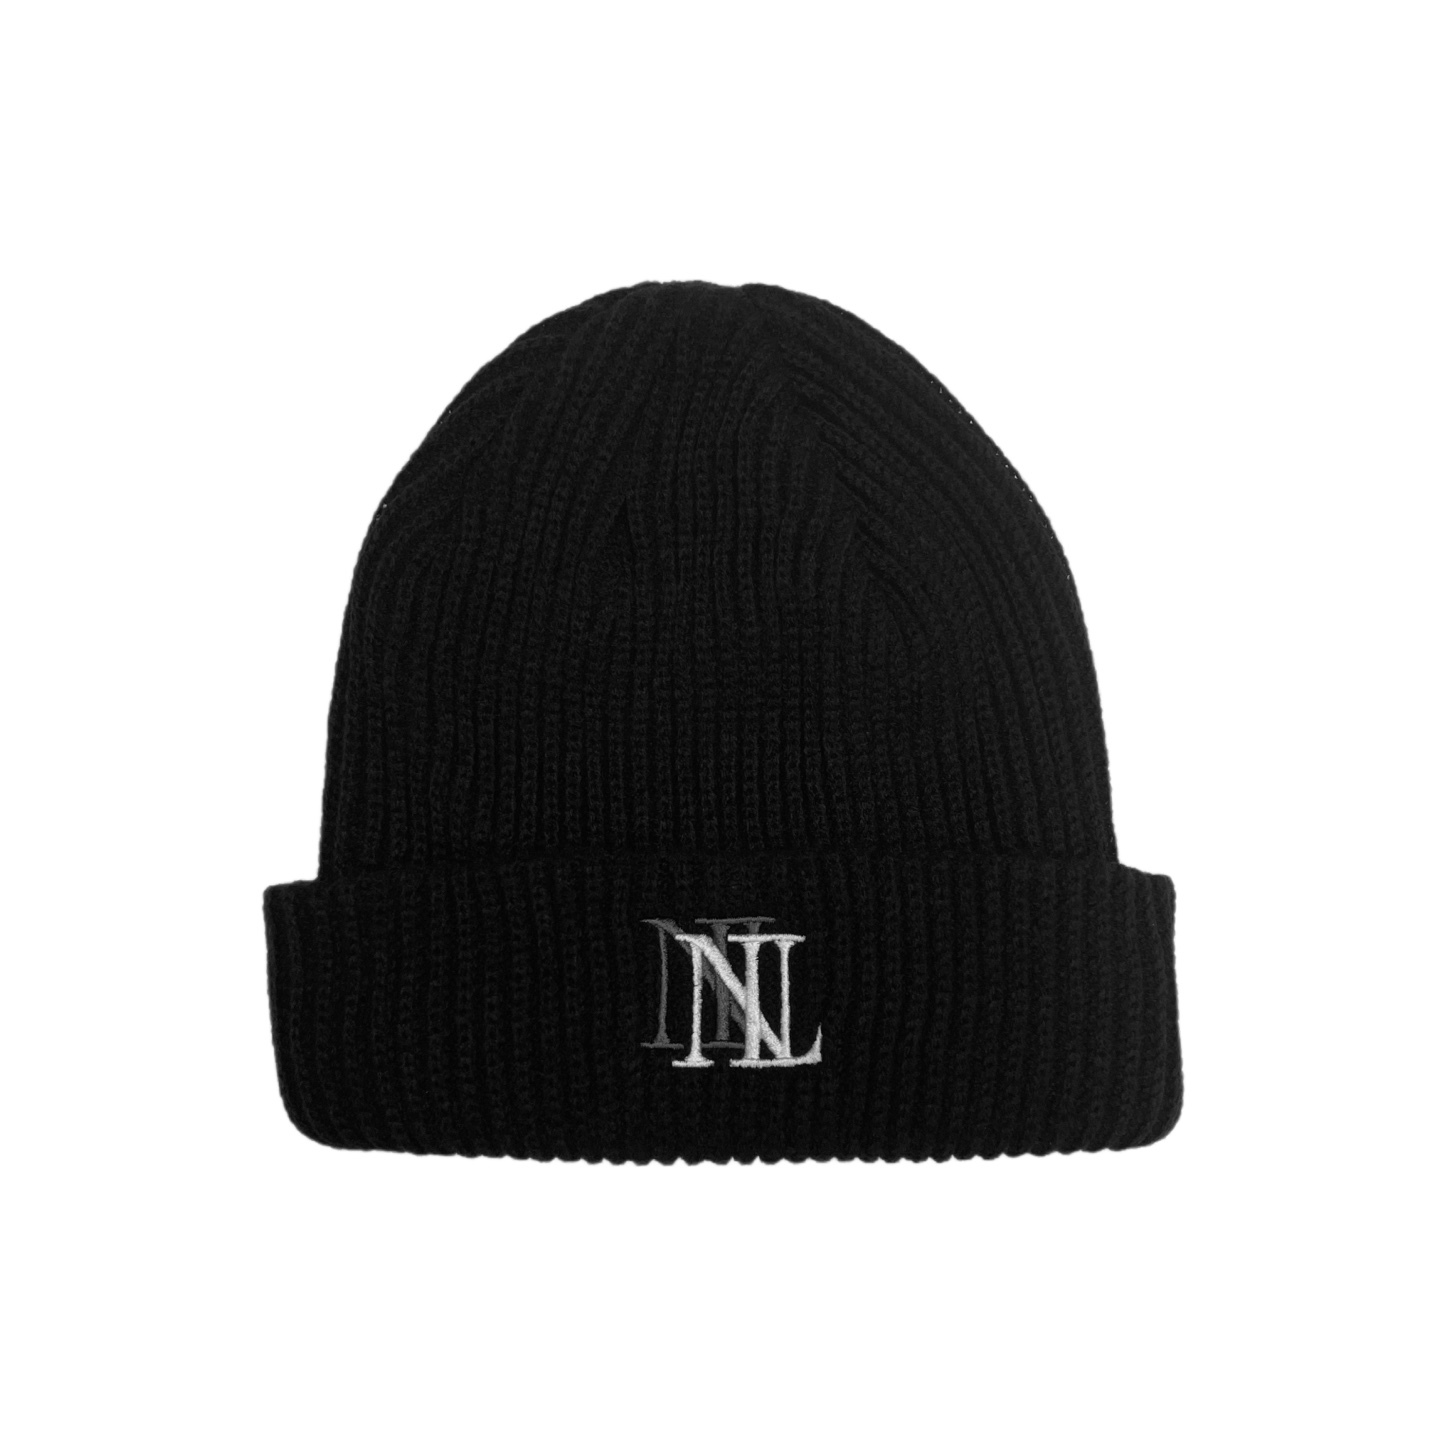 Nubellemier双标志毛线帽